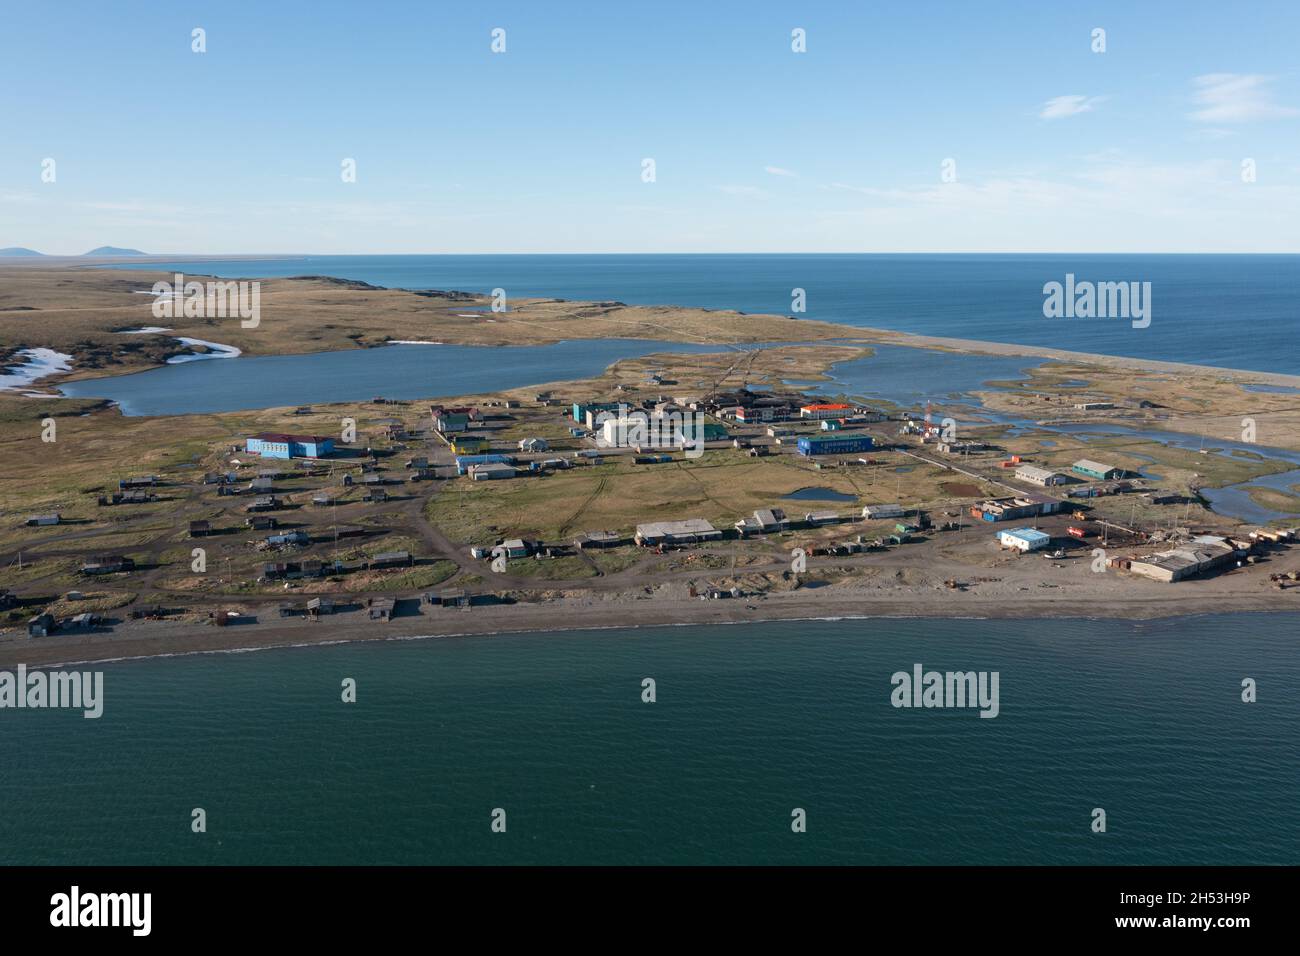 Konergino, Chukchi region, Russia - June 21, 2020: Sight at settlement from above. Stock Photo